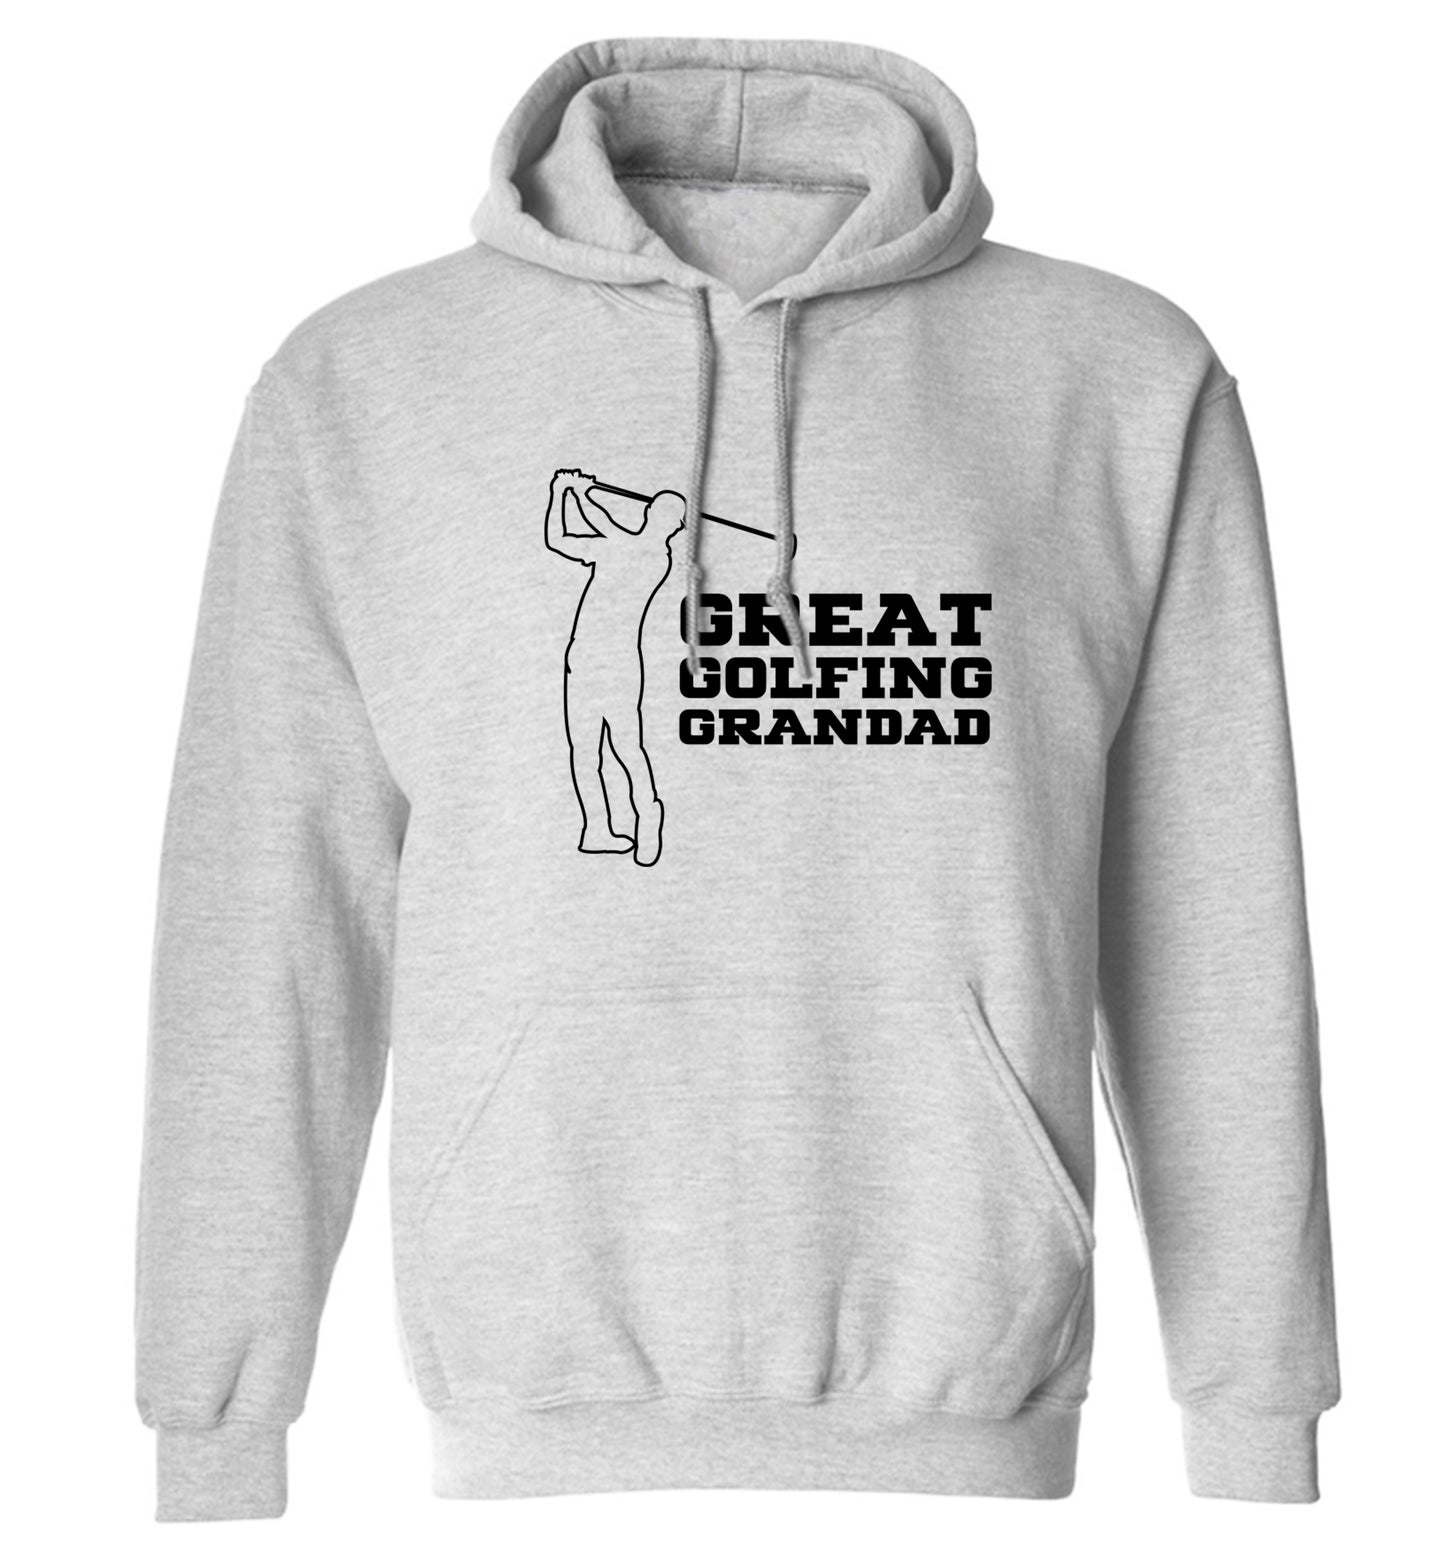 Great Golfing Grandad adults unisex grey hoodie 2XL